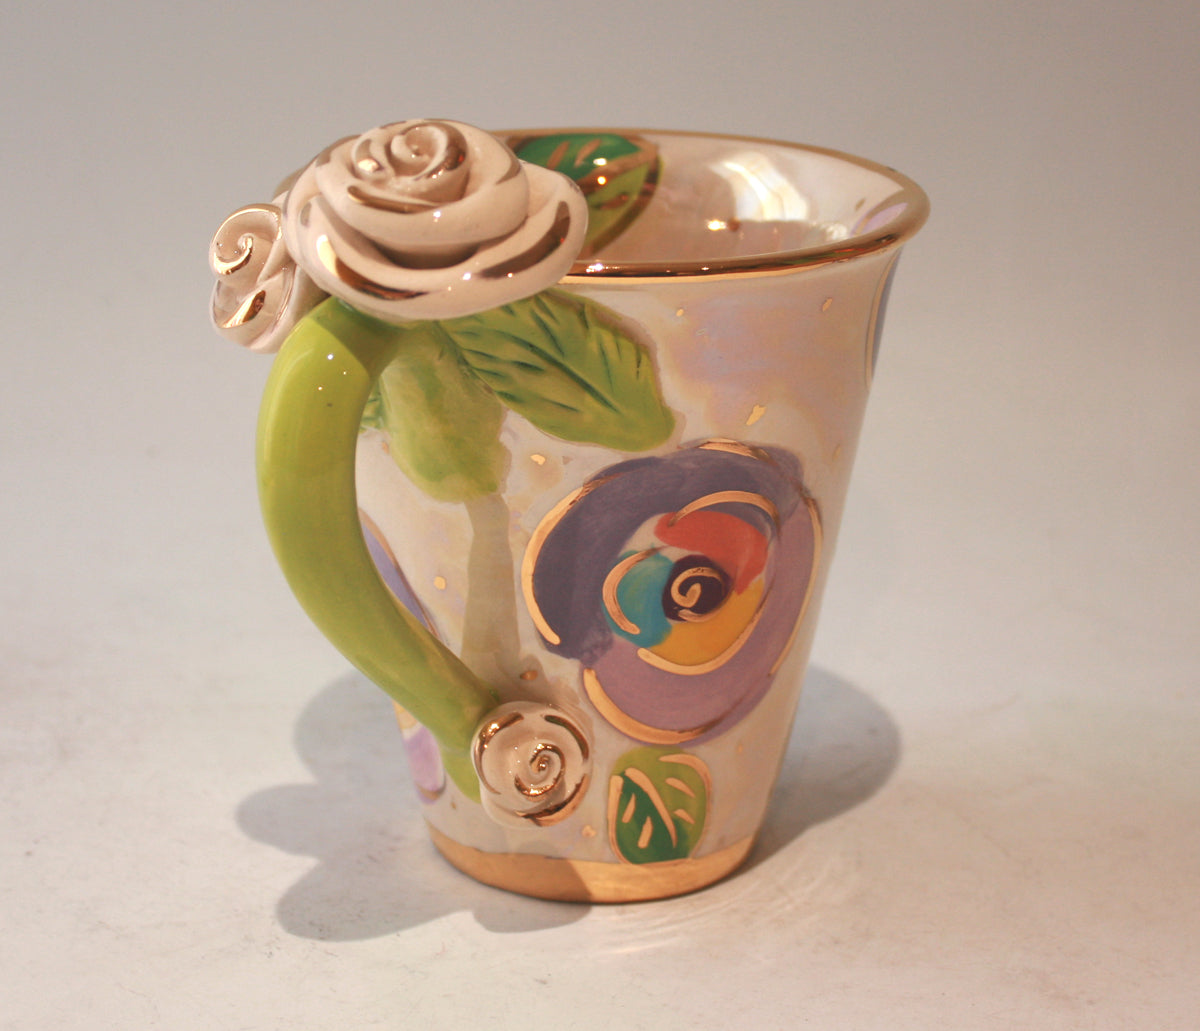 Rose Handled New Shape Large Mug in Gold New Rose Polka